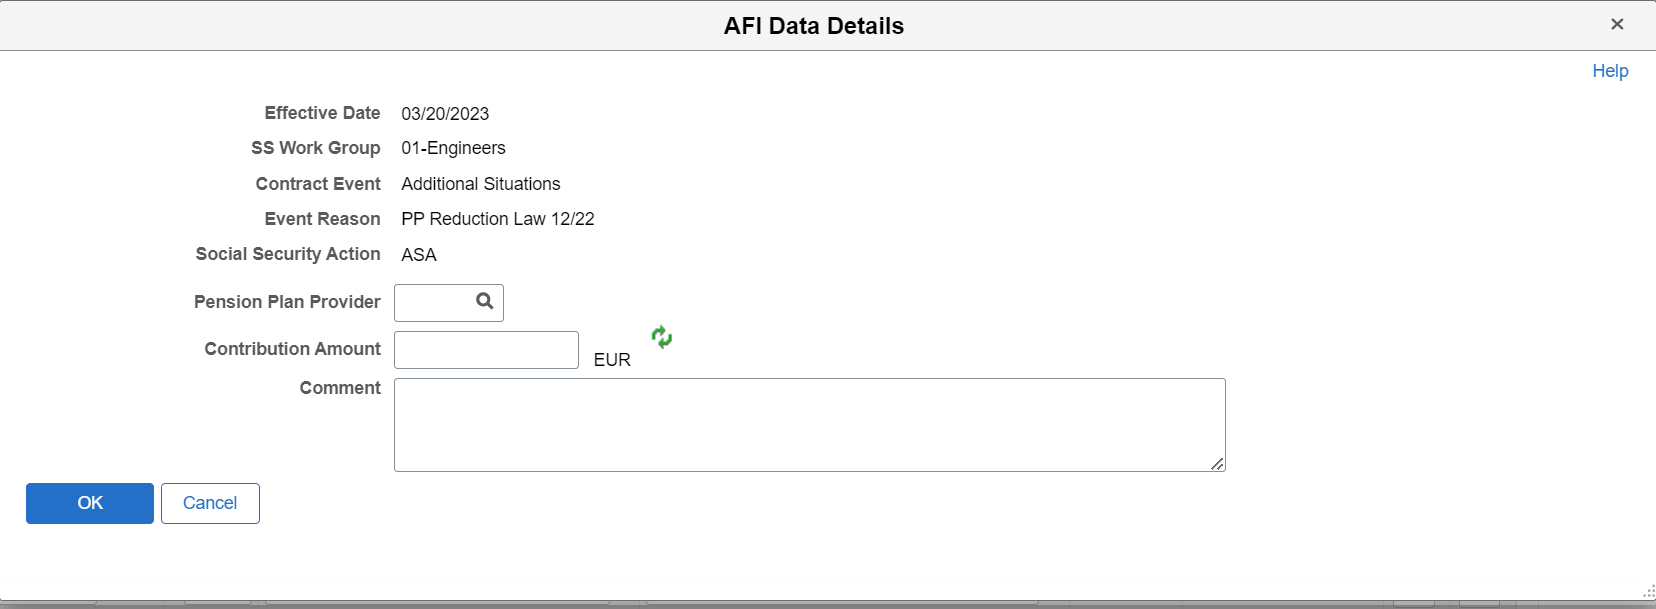 AFI Data Details modal